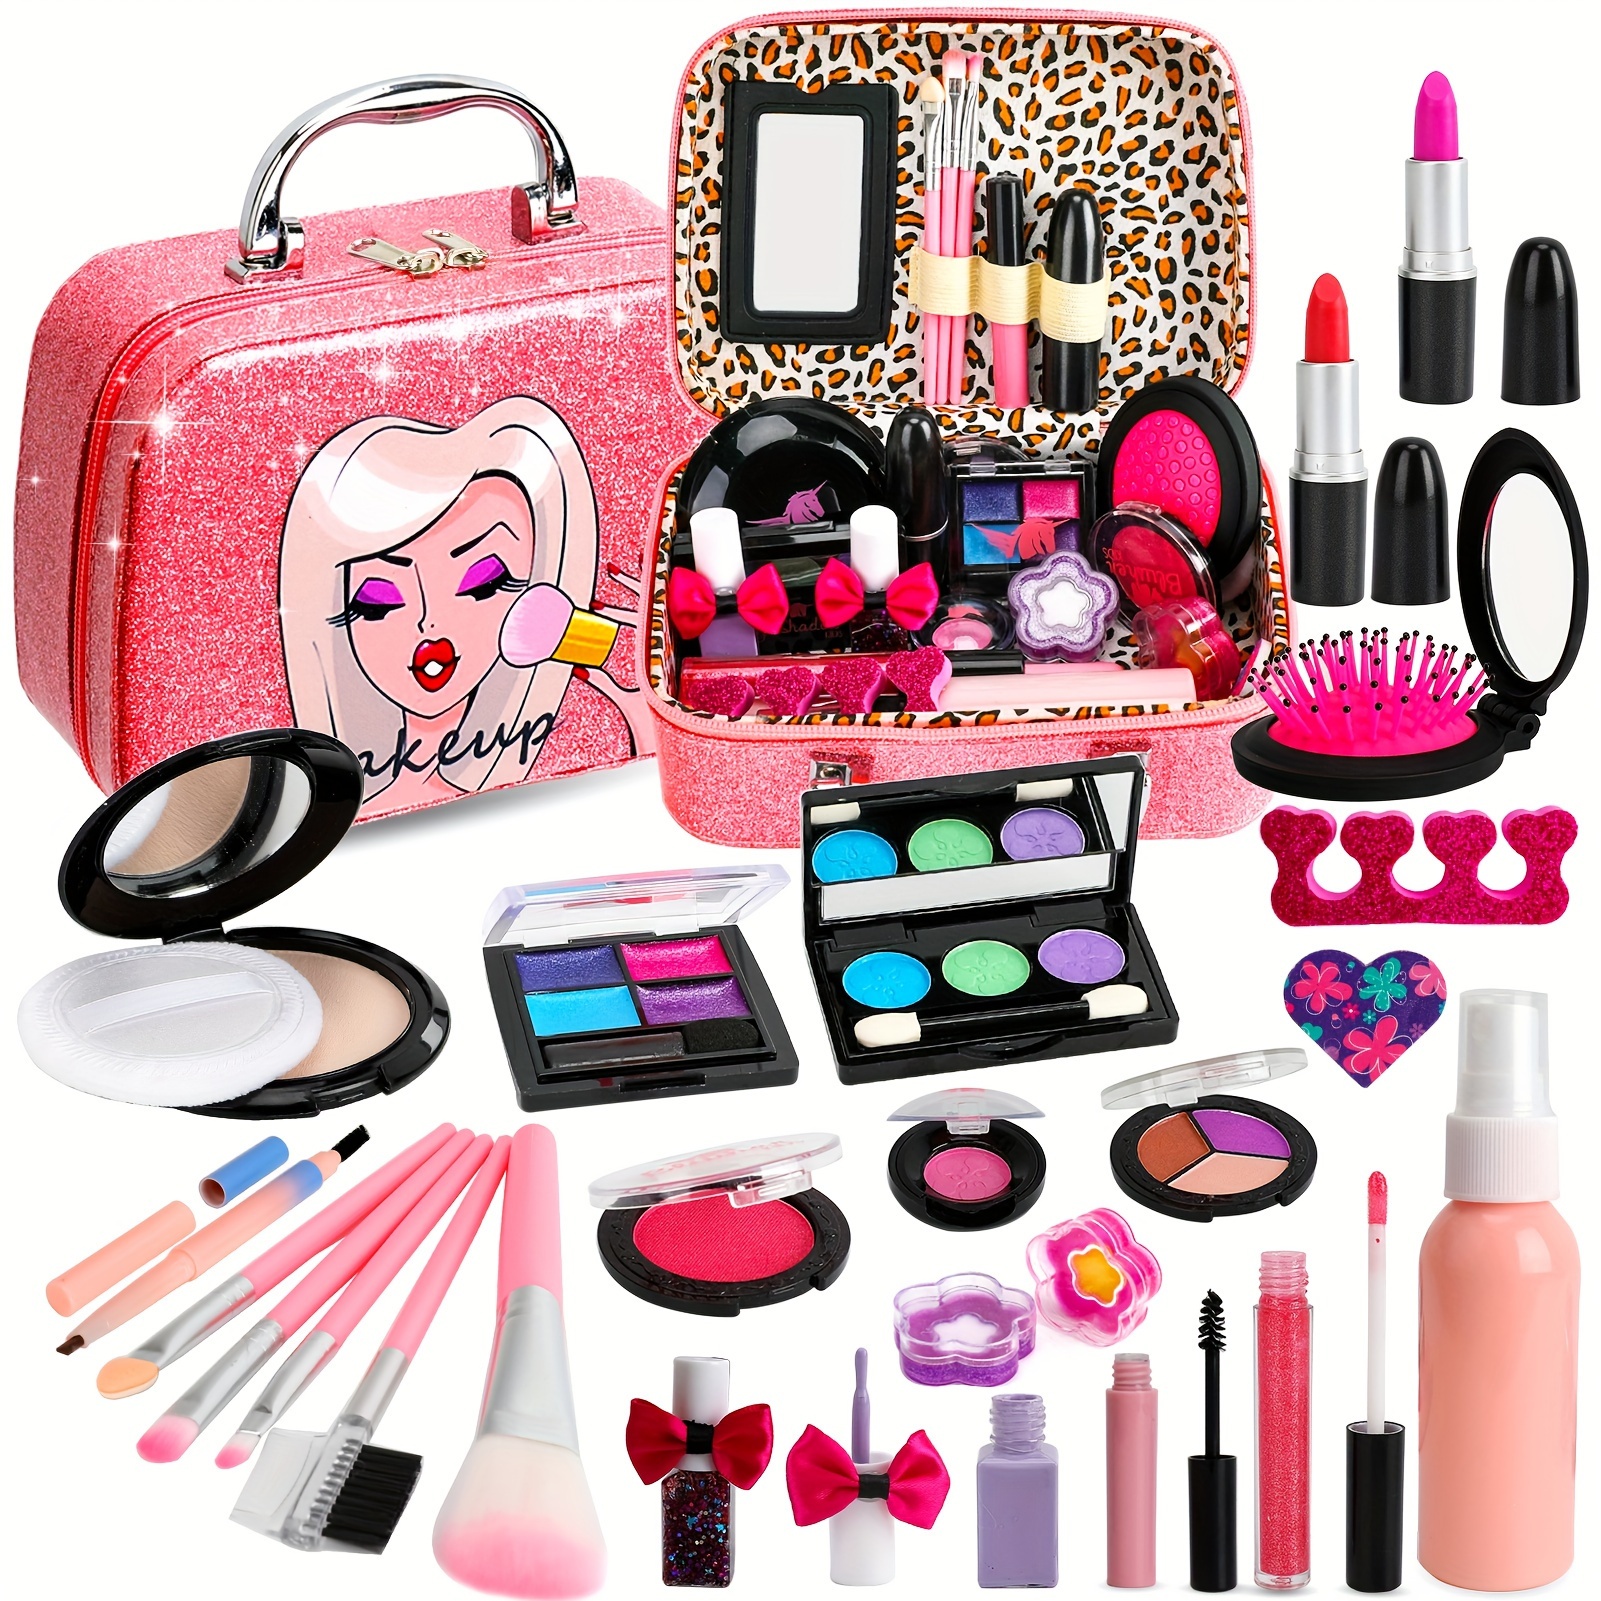 Real Makeup Girl Toys,Kids Makeup Kit for Girls - Tween Makeup Set for Girls, Non Toxic, Play Girls Makeup Kit for Kids - Top Birthday for Ages 5, 6